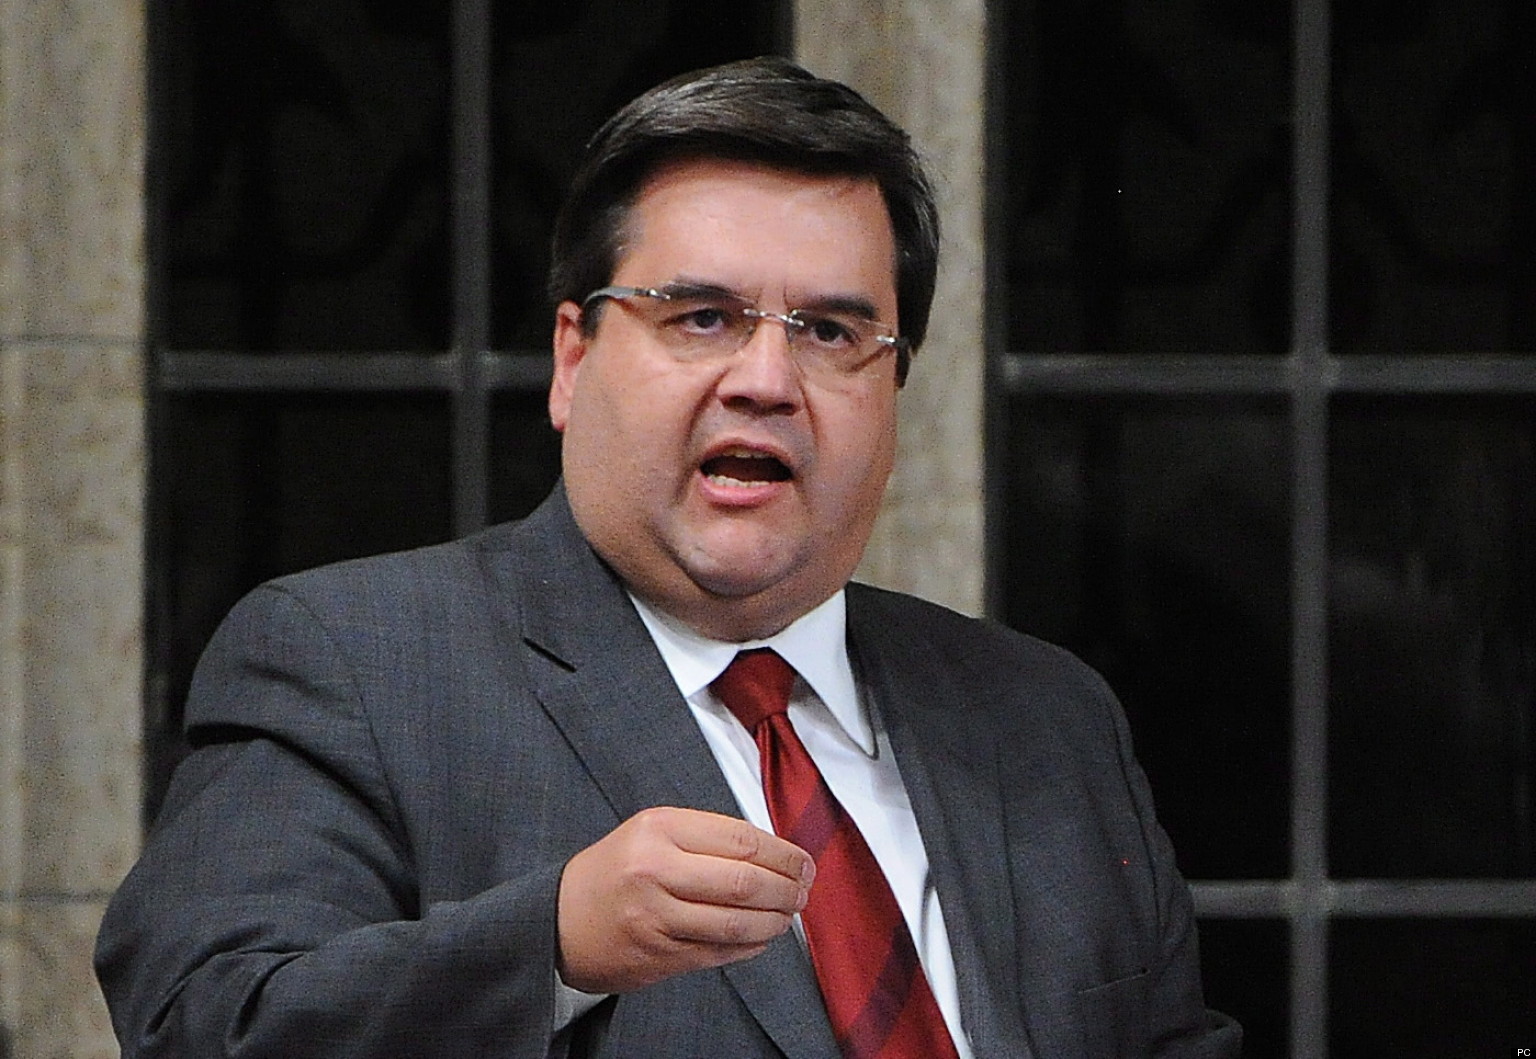 Denis Coderre announces bid for mayor of Montreal